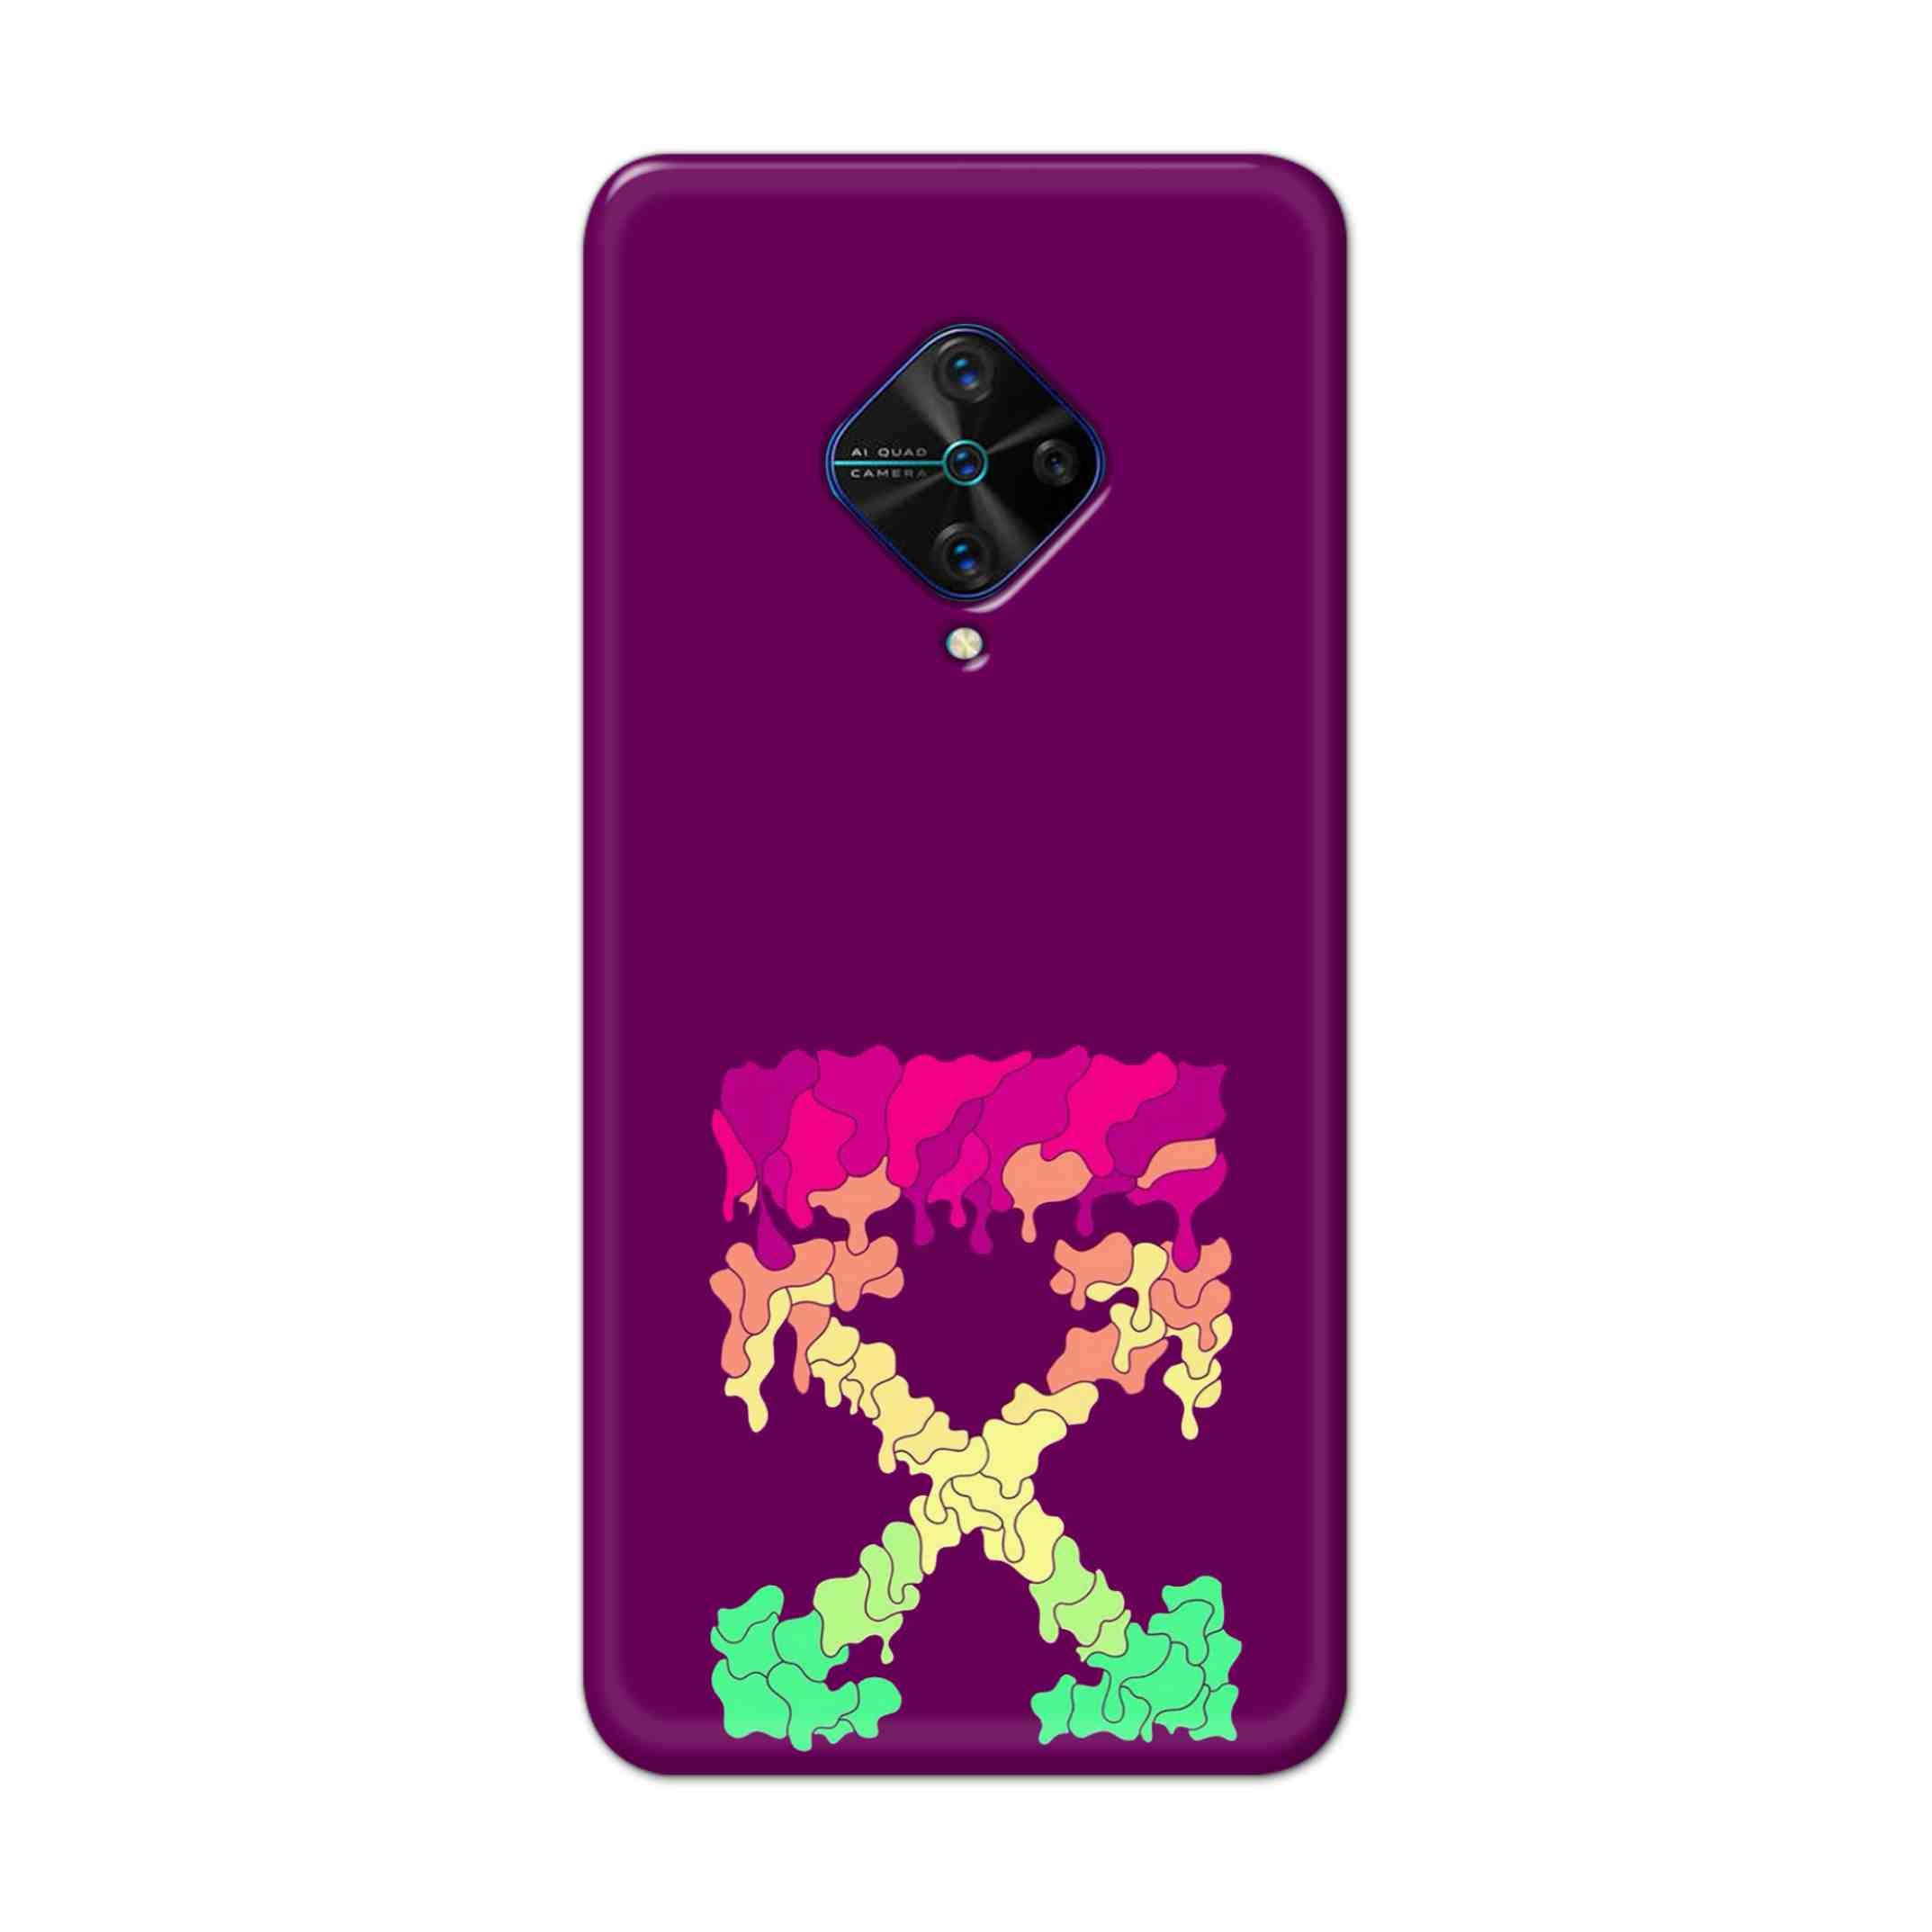 Buy X.O Hard Back Mobile Phone Case Cover For Vivo S1 Pro Online